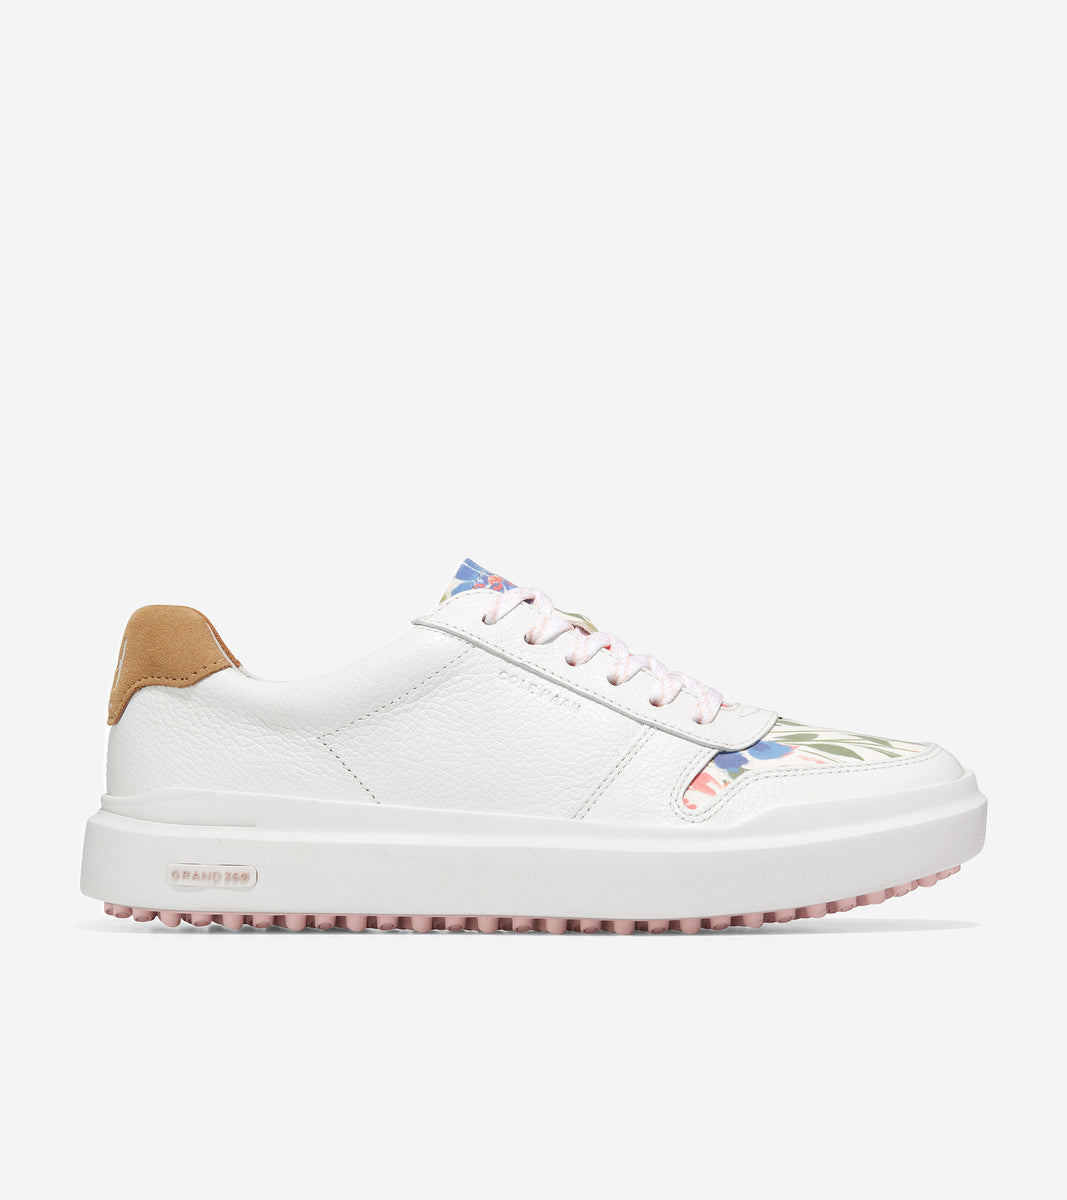 w25995-GrandPrø AM Golf Sneaker-Optic White-Floral Print